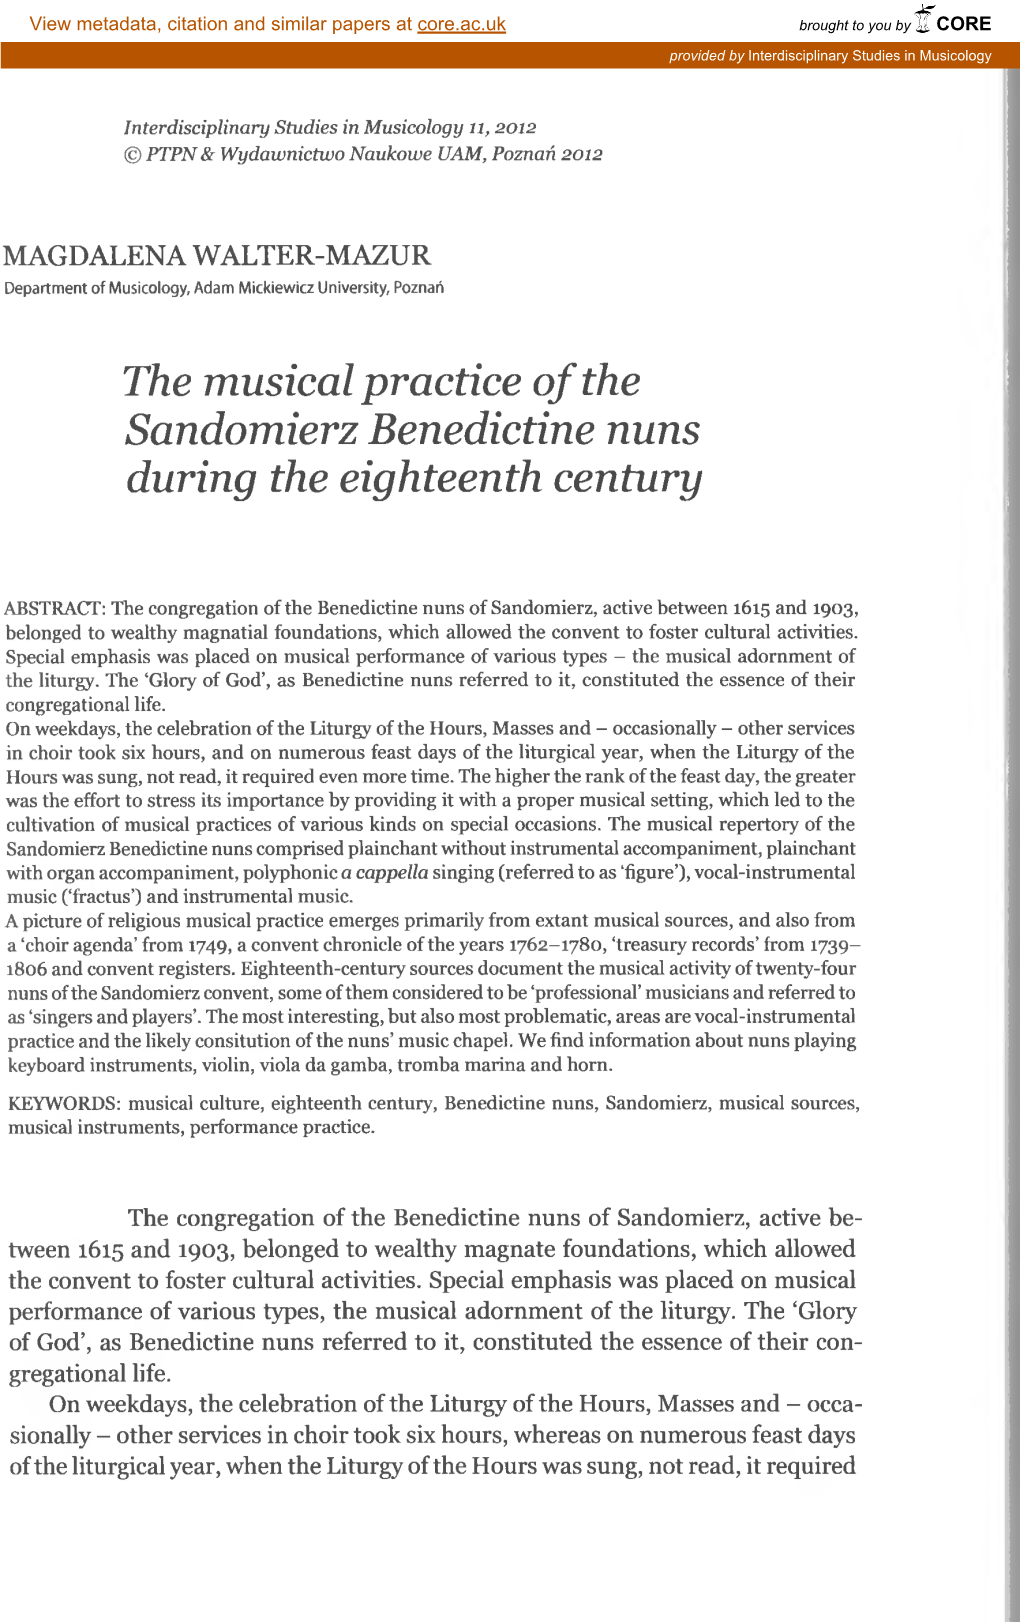 The Musical Practice of the Sandomierz Benedictine Nuns During the Eighteenth Century